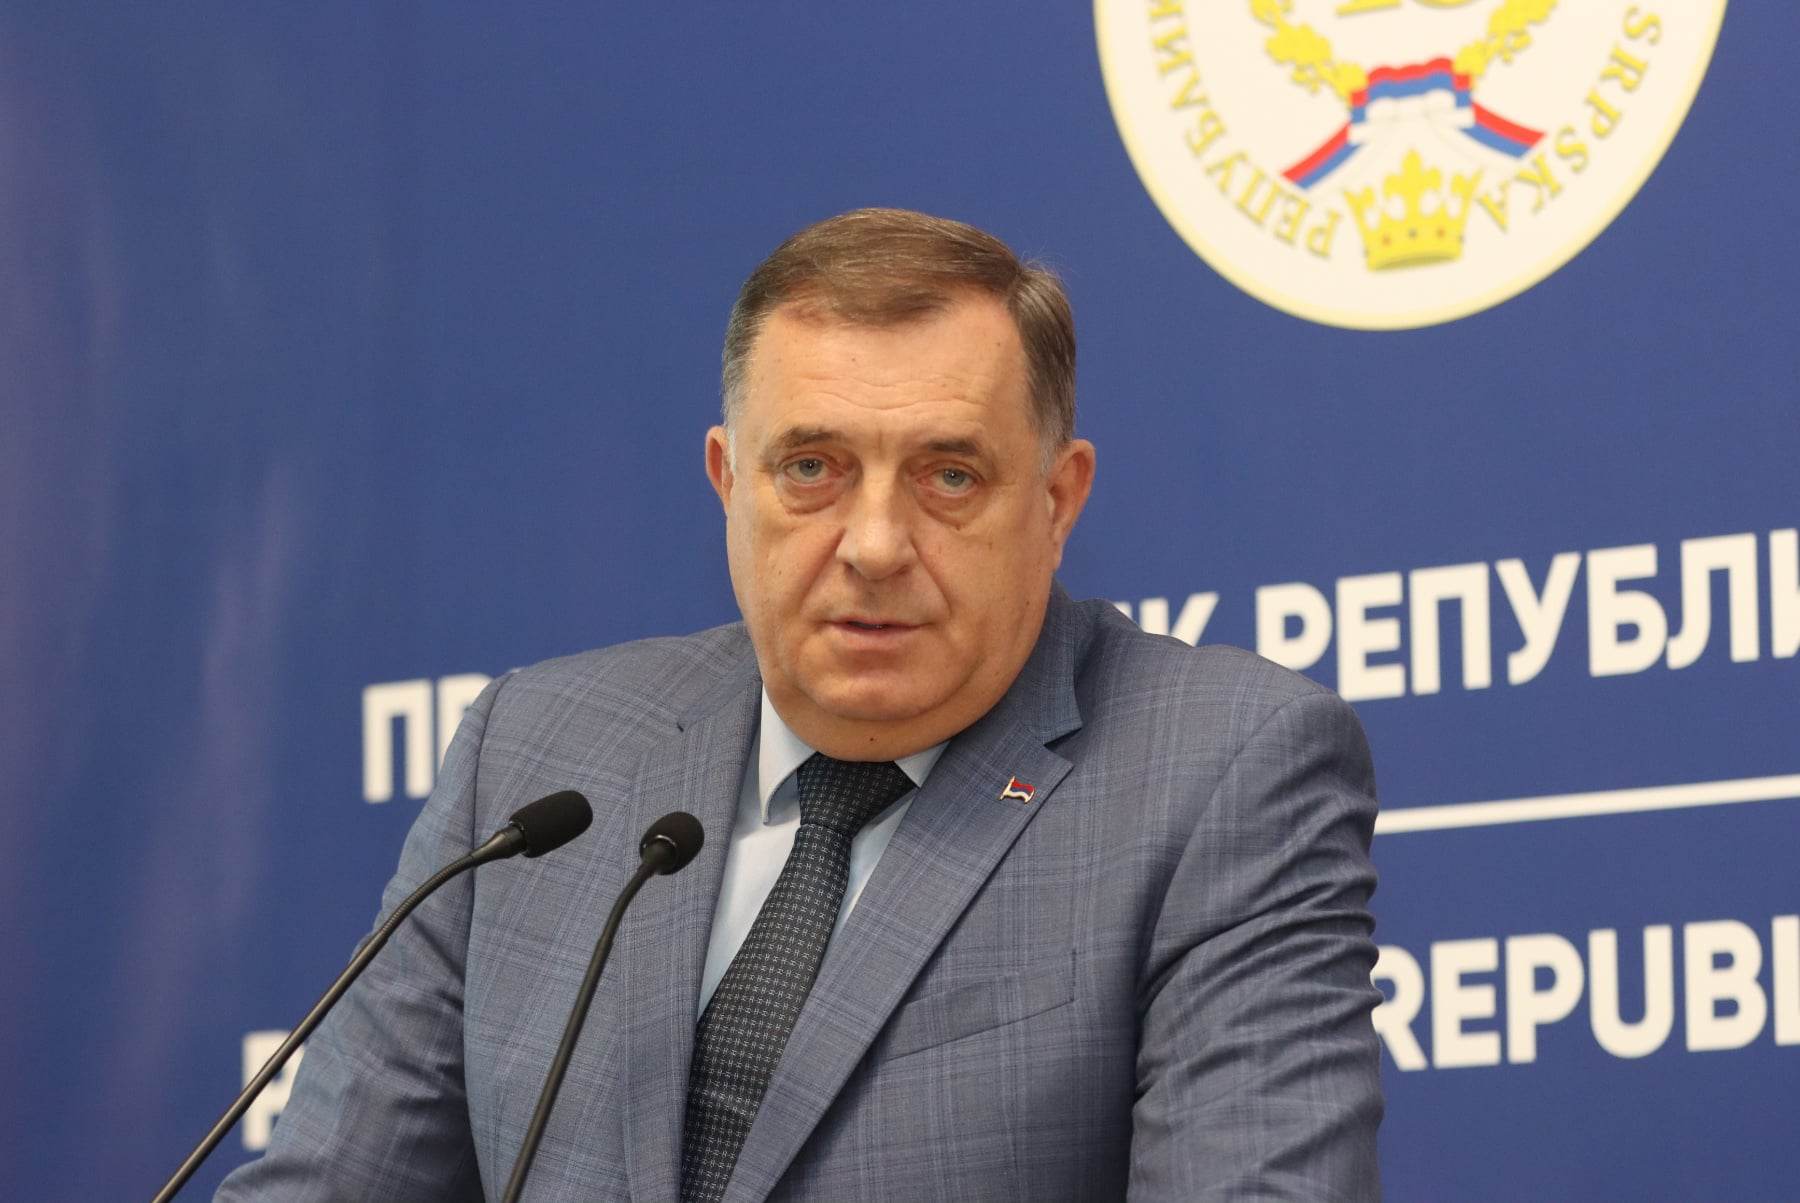 Republika Srpska Nullifies The Illegal Office Of High Representative In Bosnia